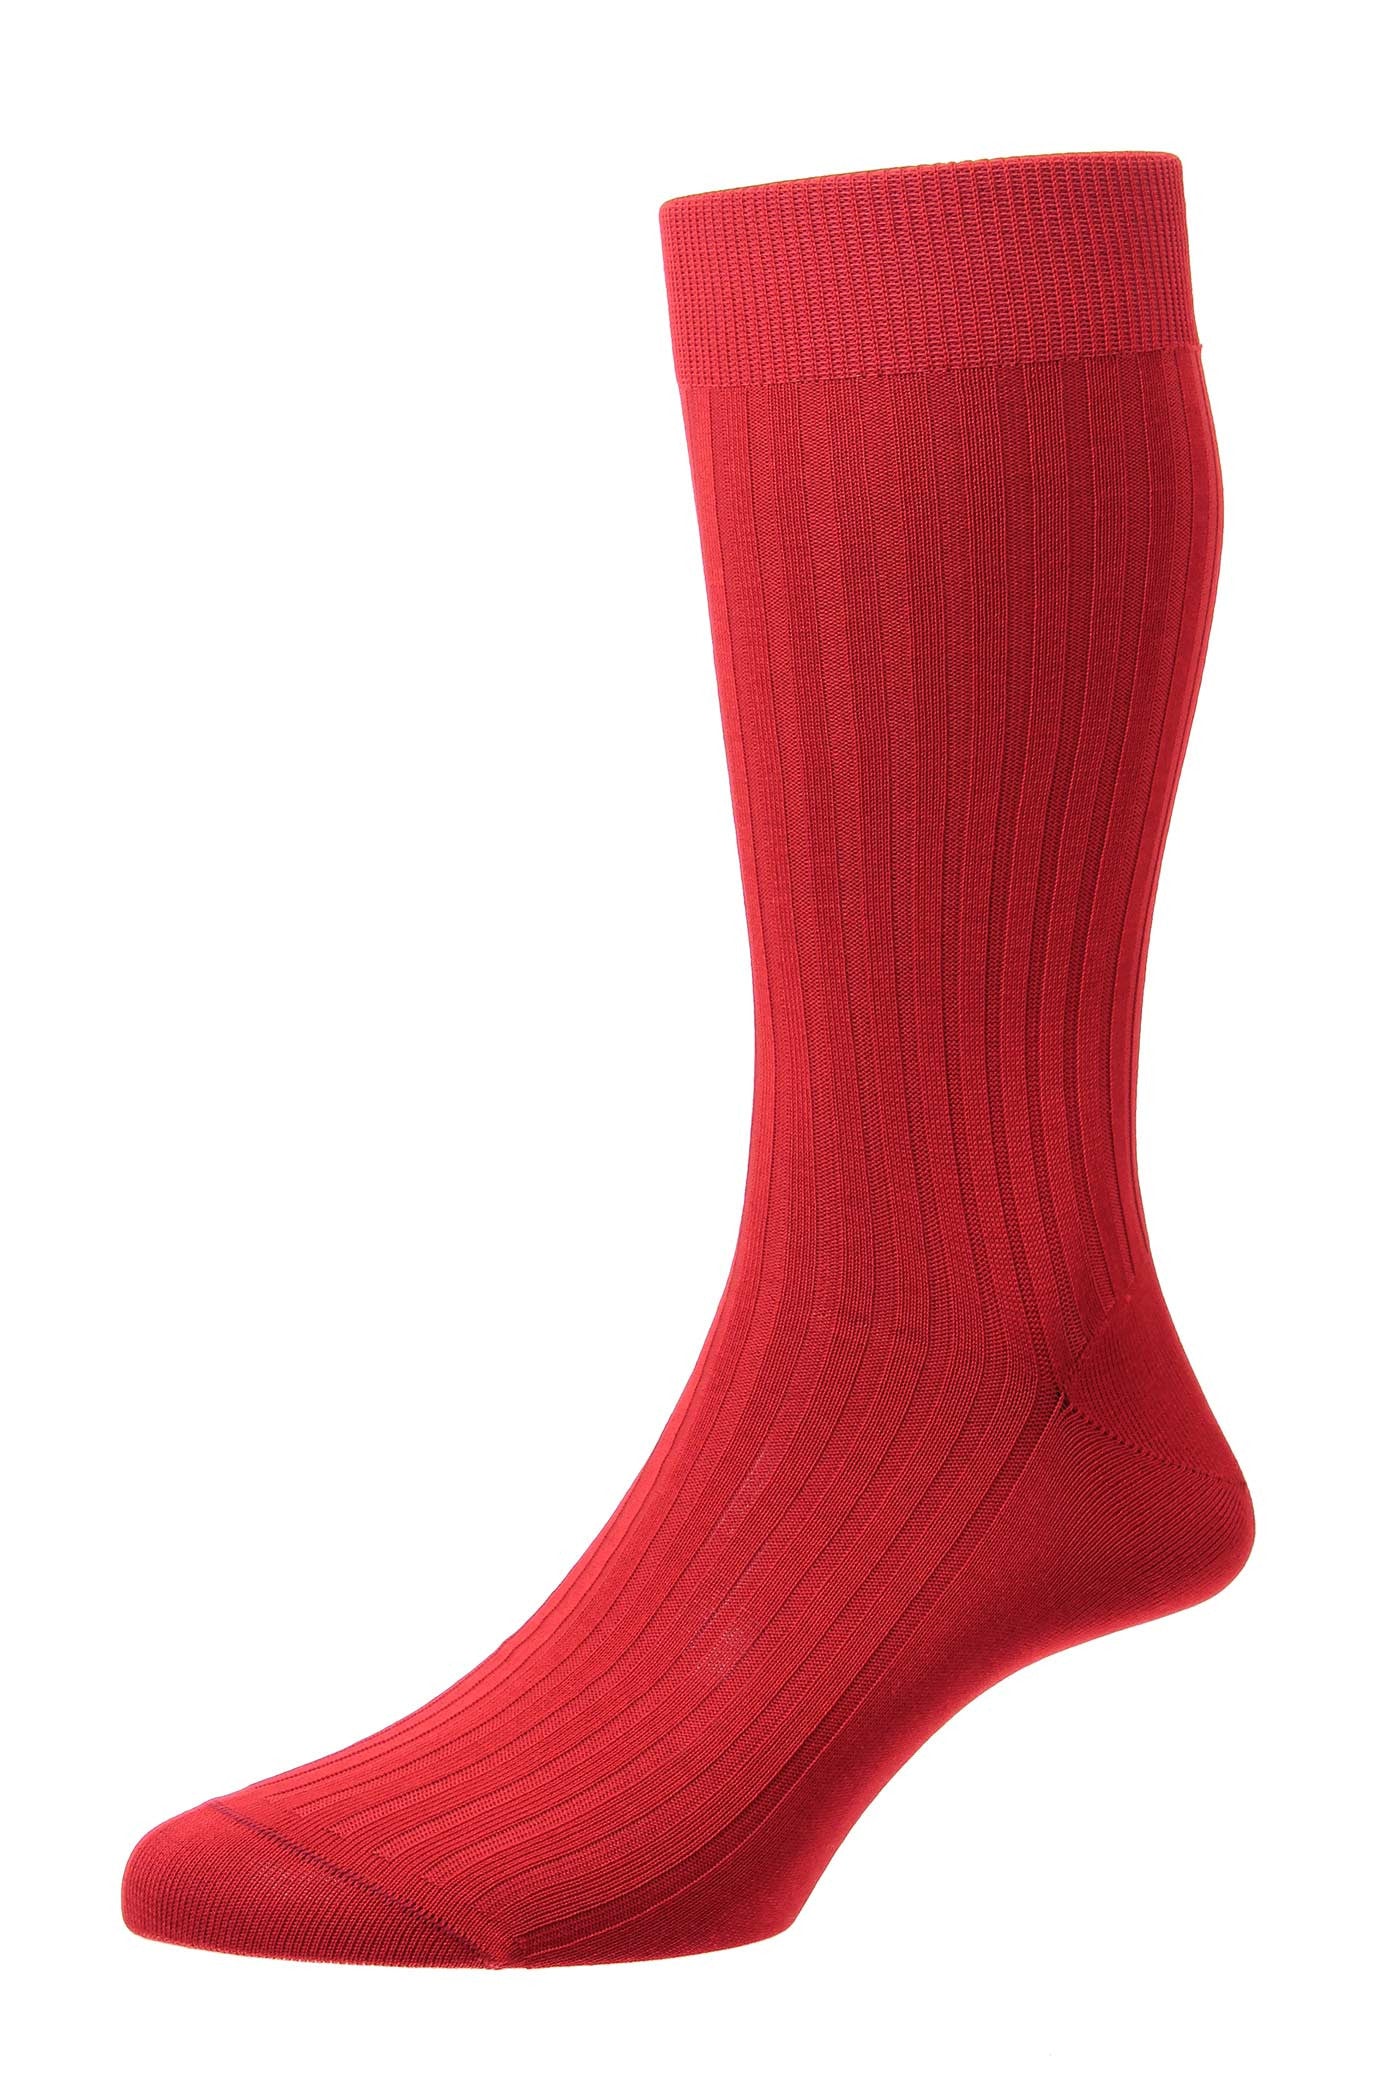 Men's Socks - Danvers (5614) 5x3 Rib Fil d'Ecosse / Cotton Lisle - SCARLET